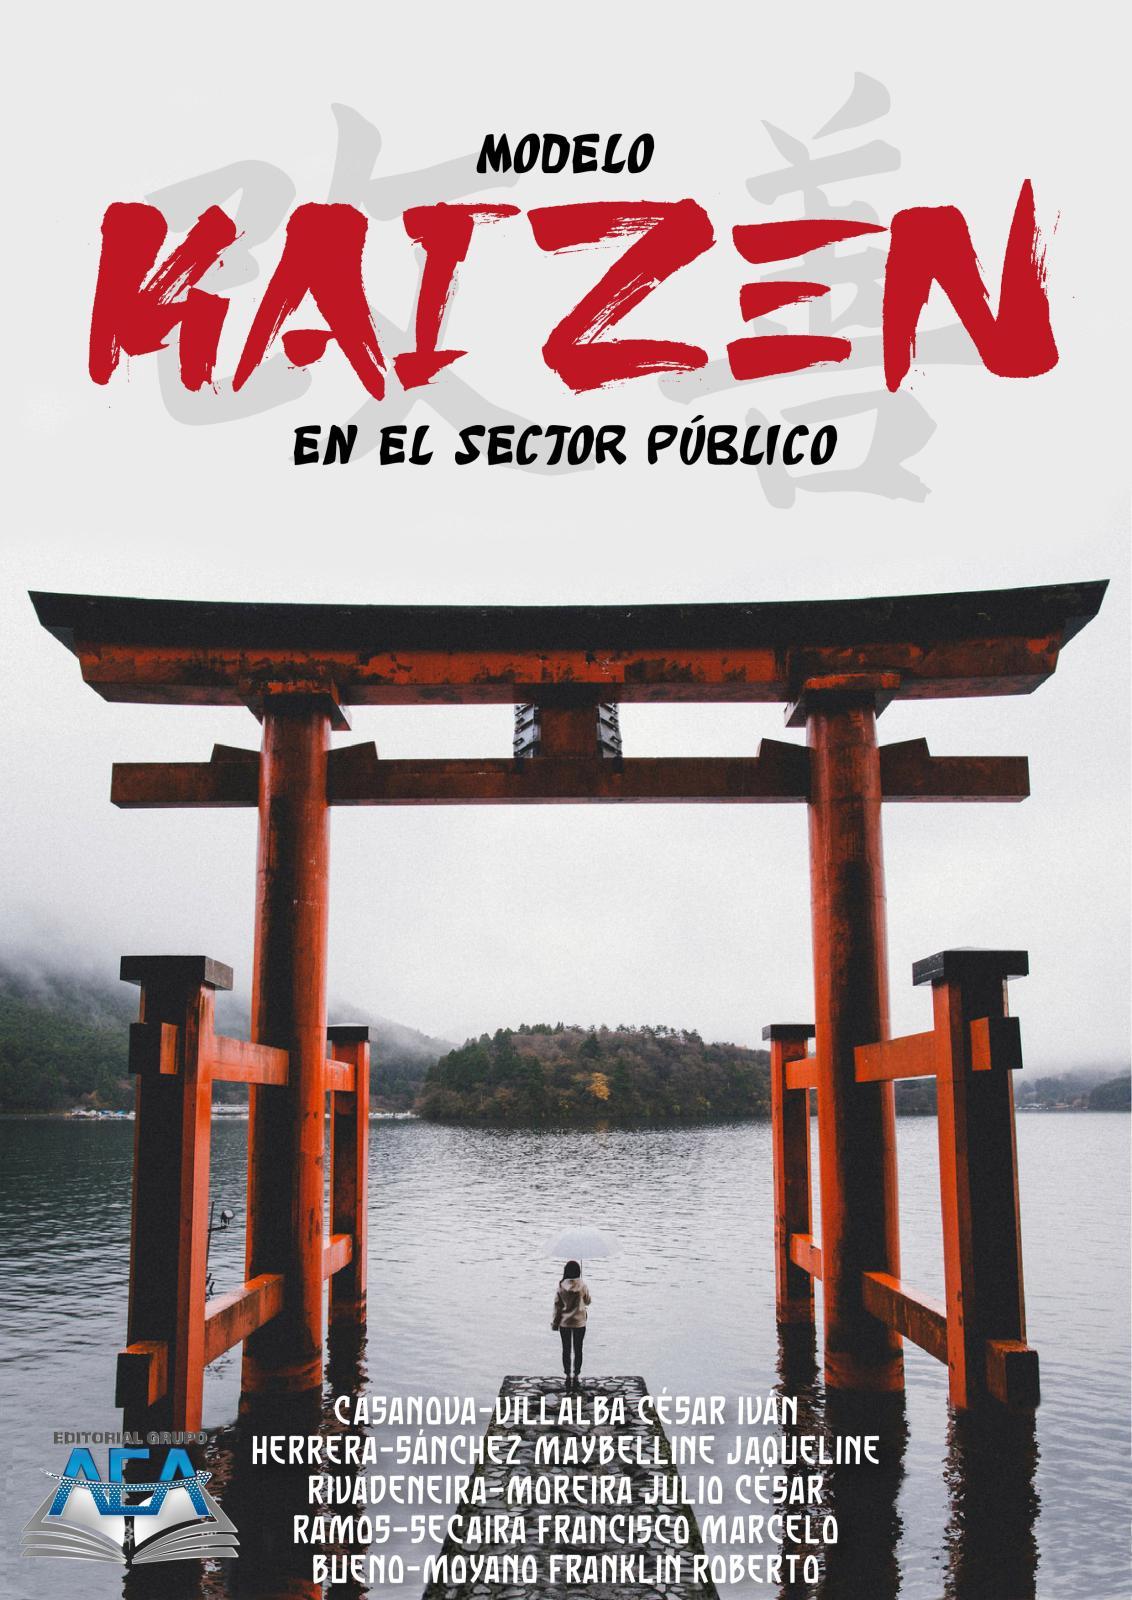 Read more about Modelo Kaizen en el sector público: Kaizen model in the public sector